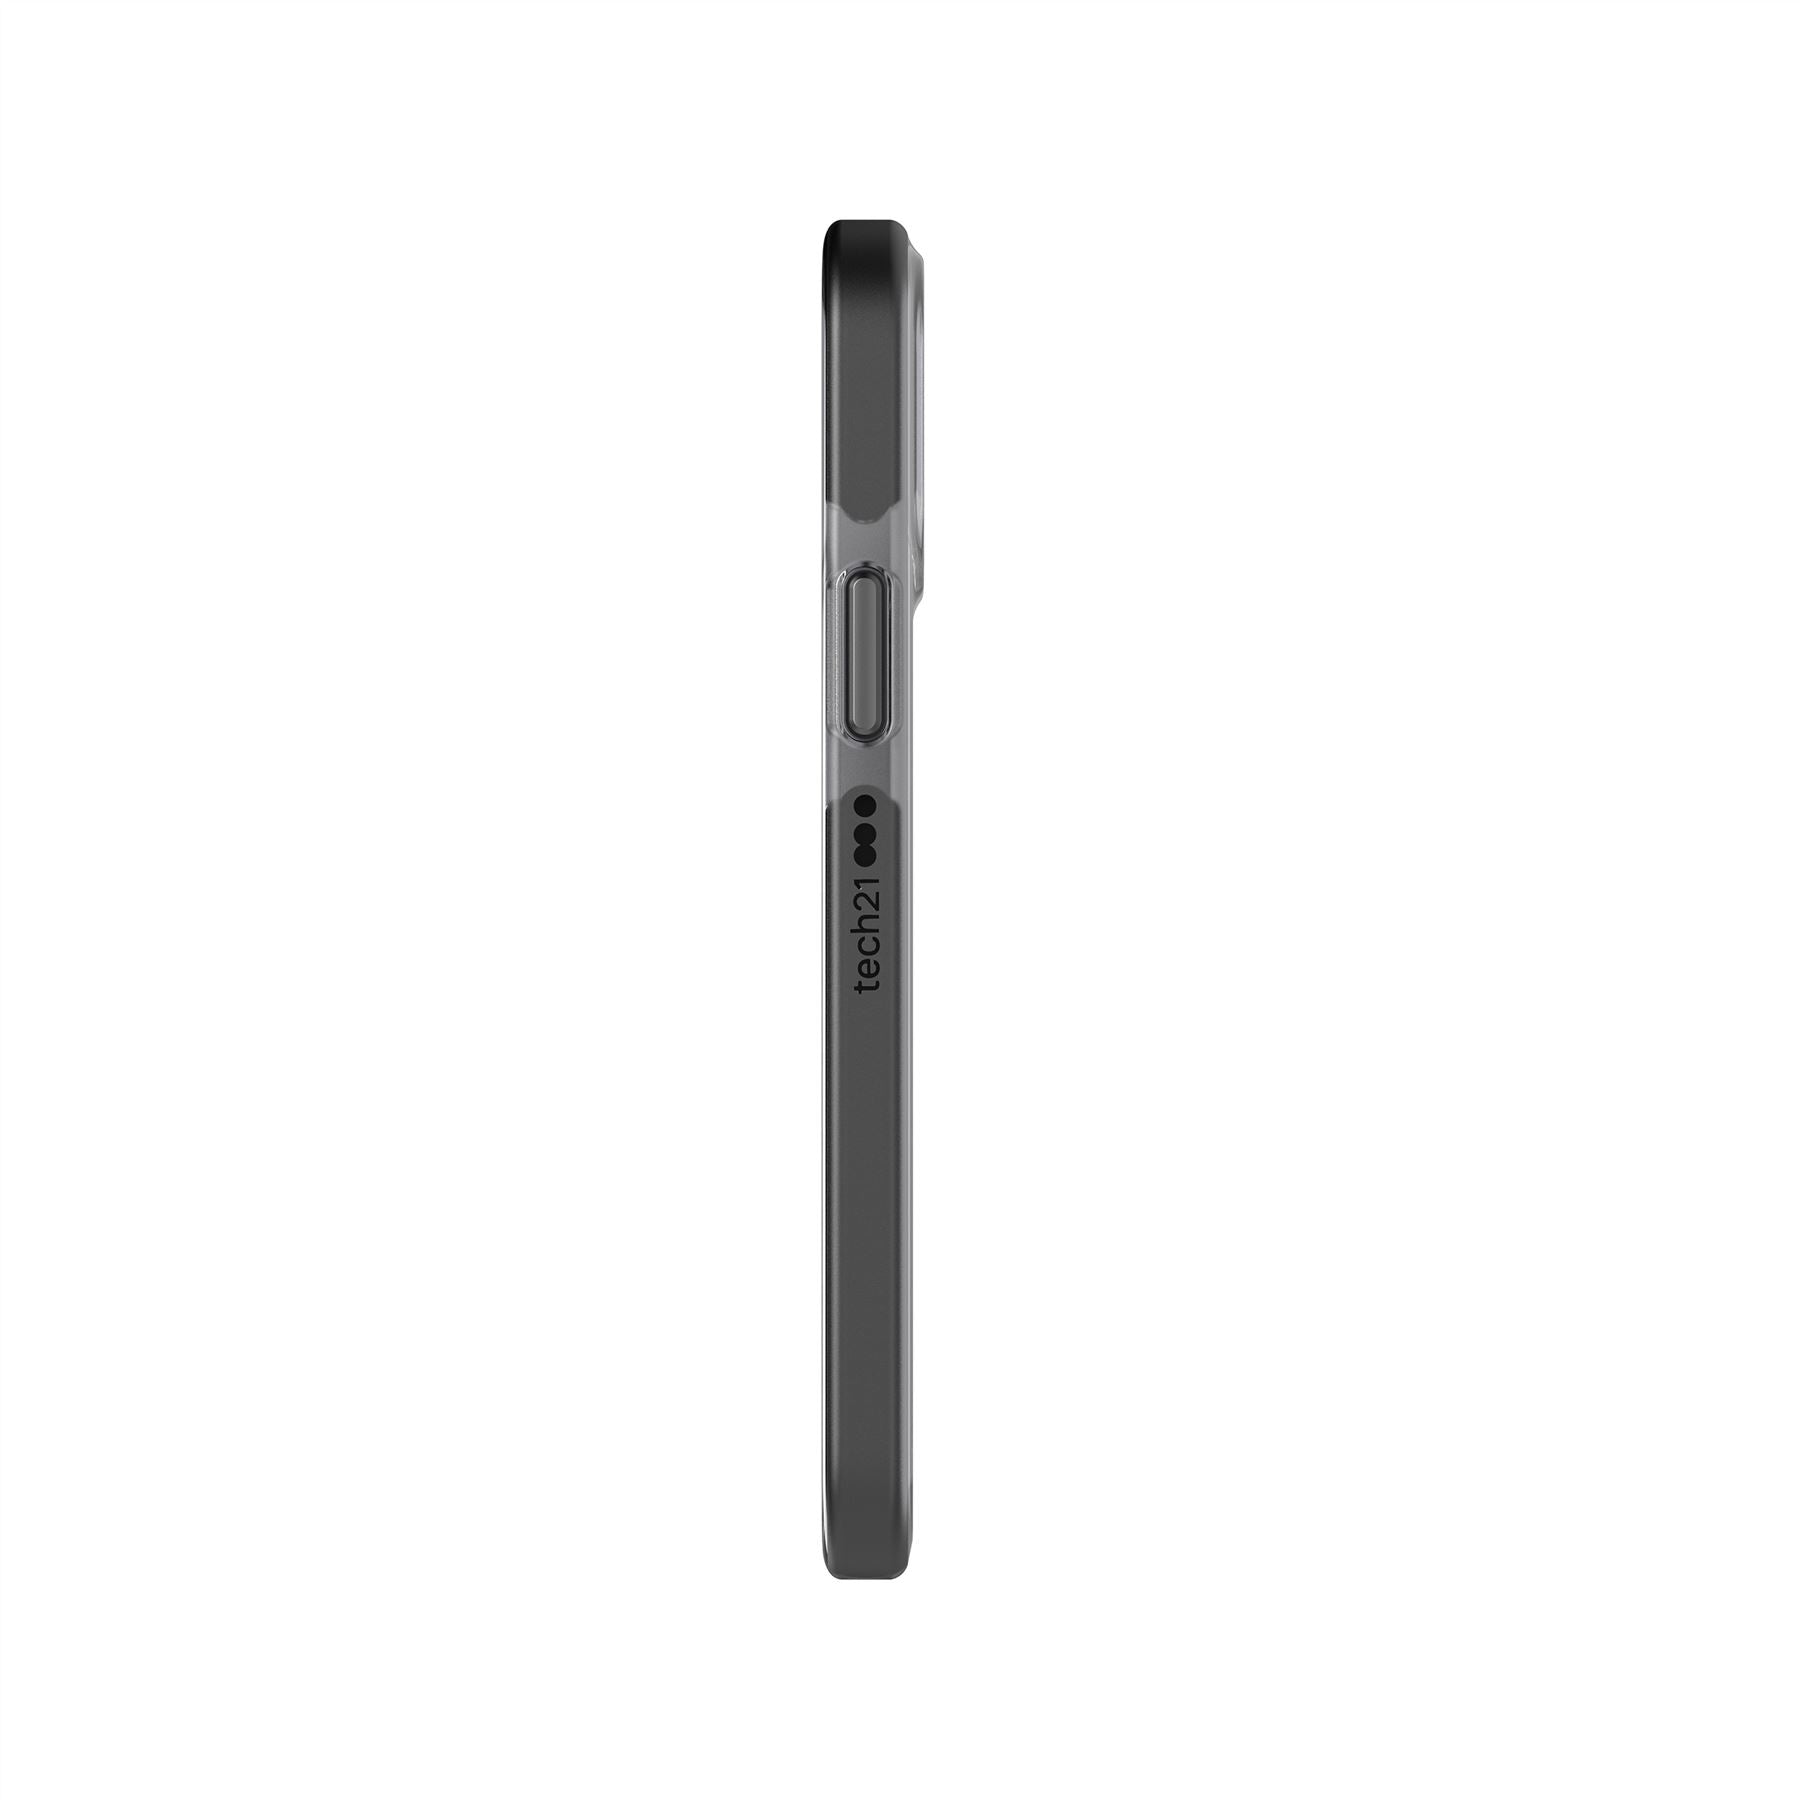 Evo Check - Apple iPhone 12/12 Pro Case - Smokey Black